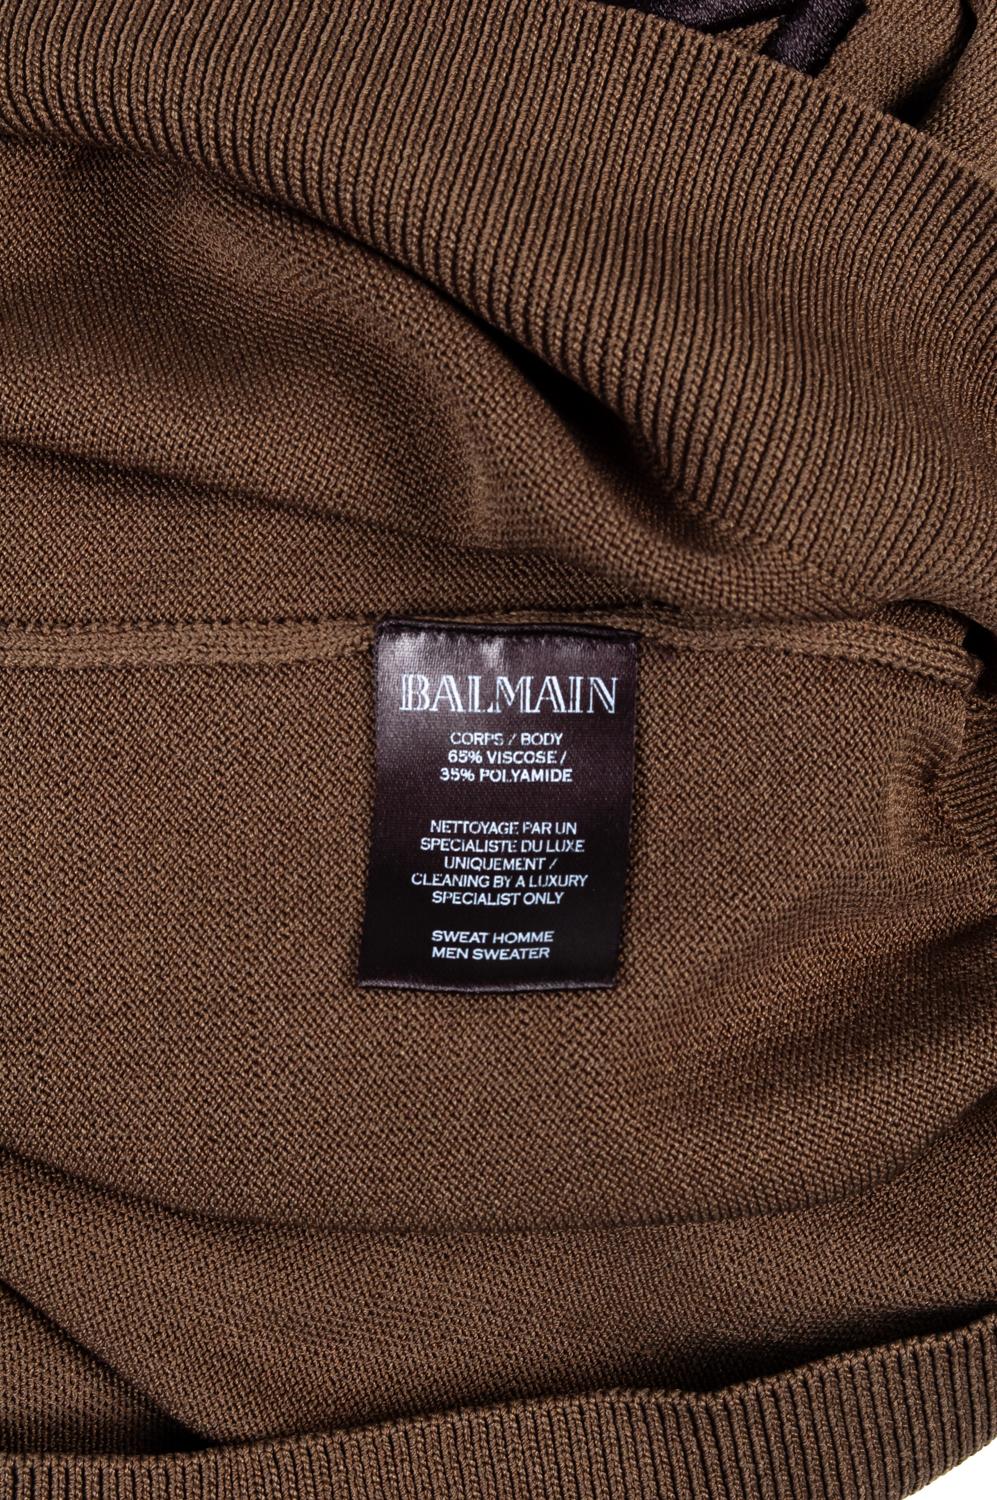 Balmain Men Sweater Crew Neck Size S/M, S606 For Sale 2